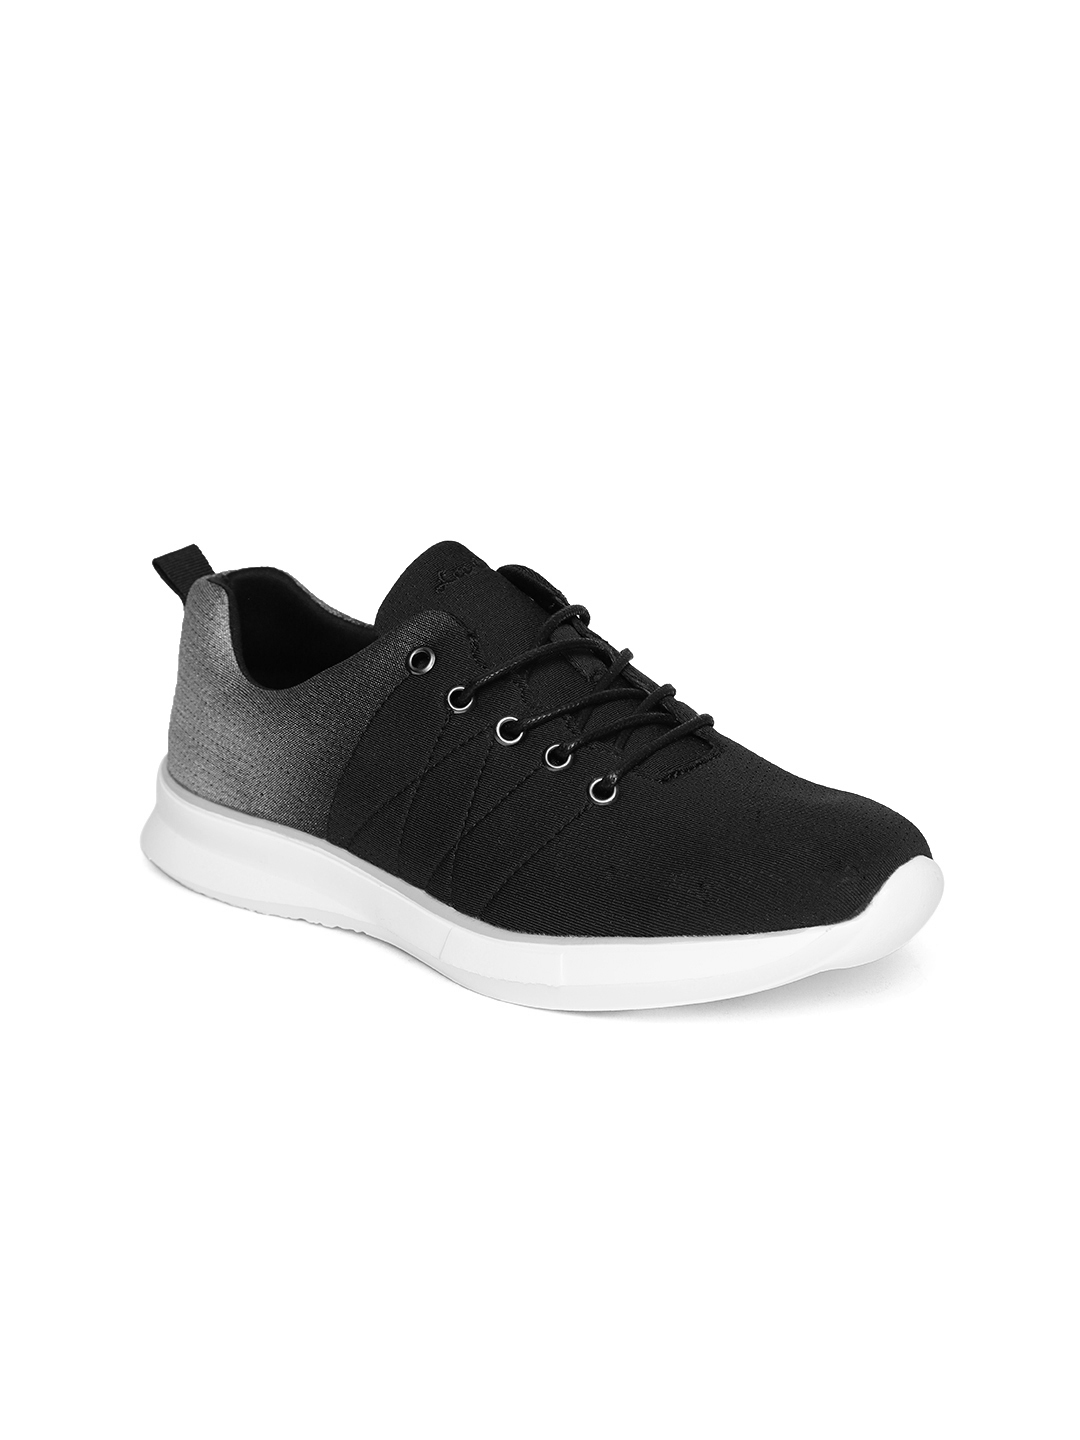 Buy Lee Cooper Women Black Sneakers - Casual Shoes for Women 4426264 ...